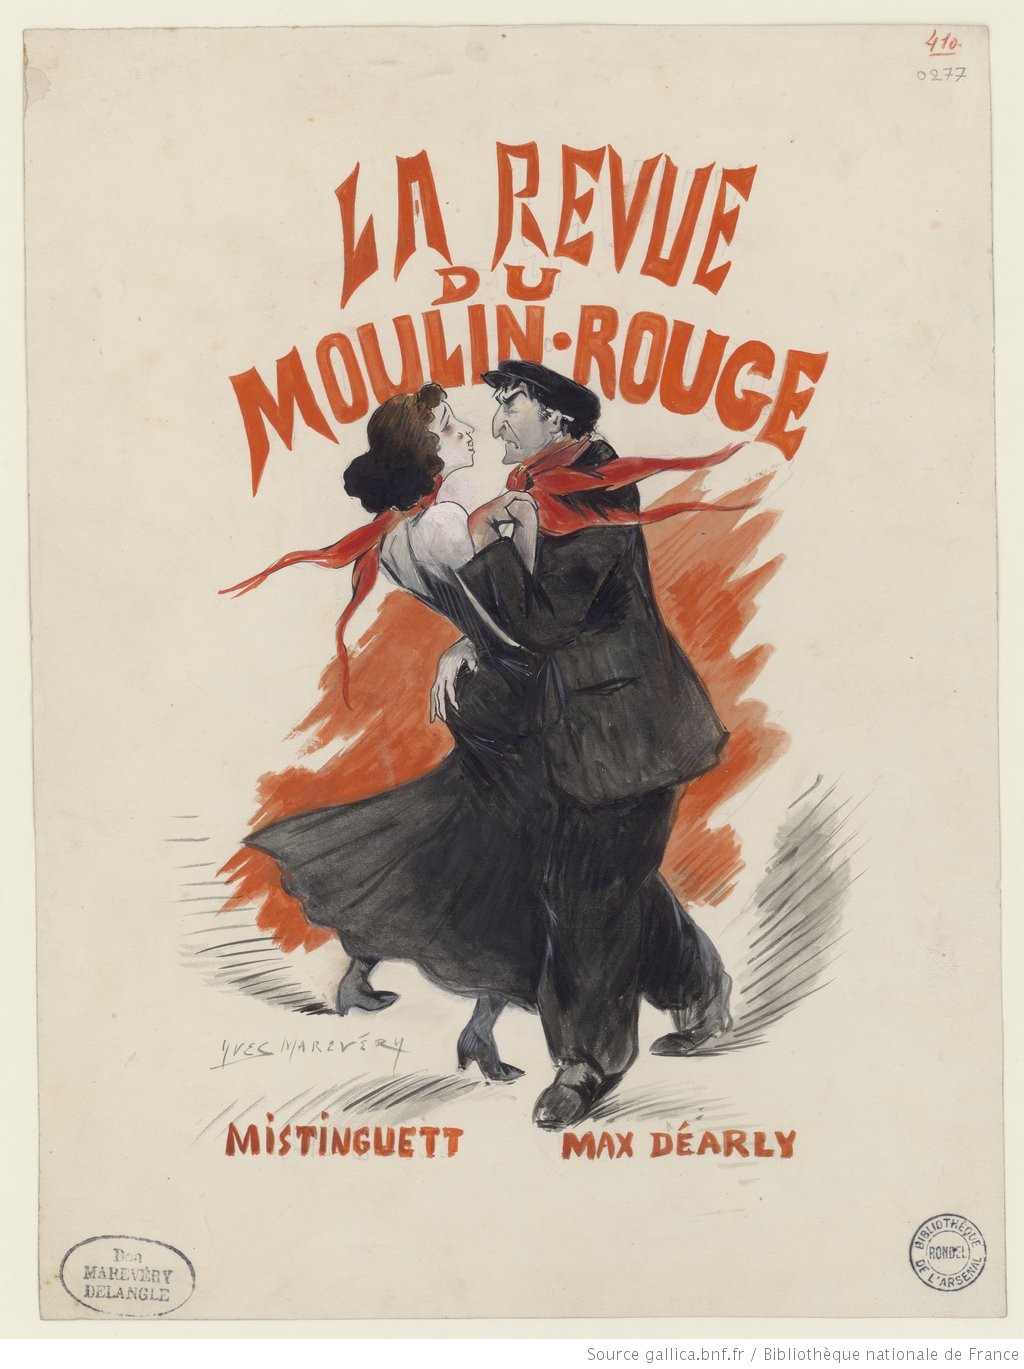 Mistinguett and Max Dearly in “La Revue du Moulin,” by Yves Marevéry, 1908, Bibliothèque nationale de France.